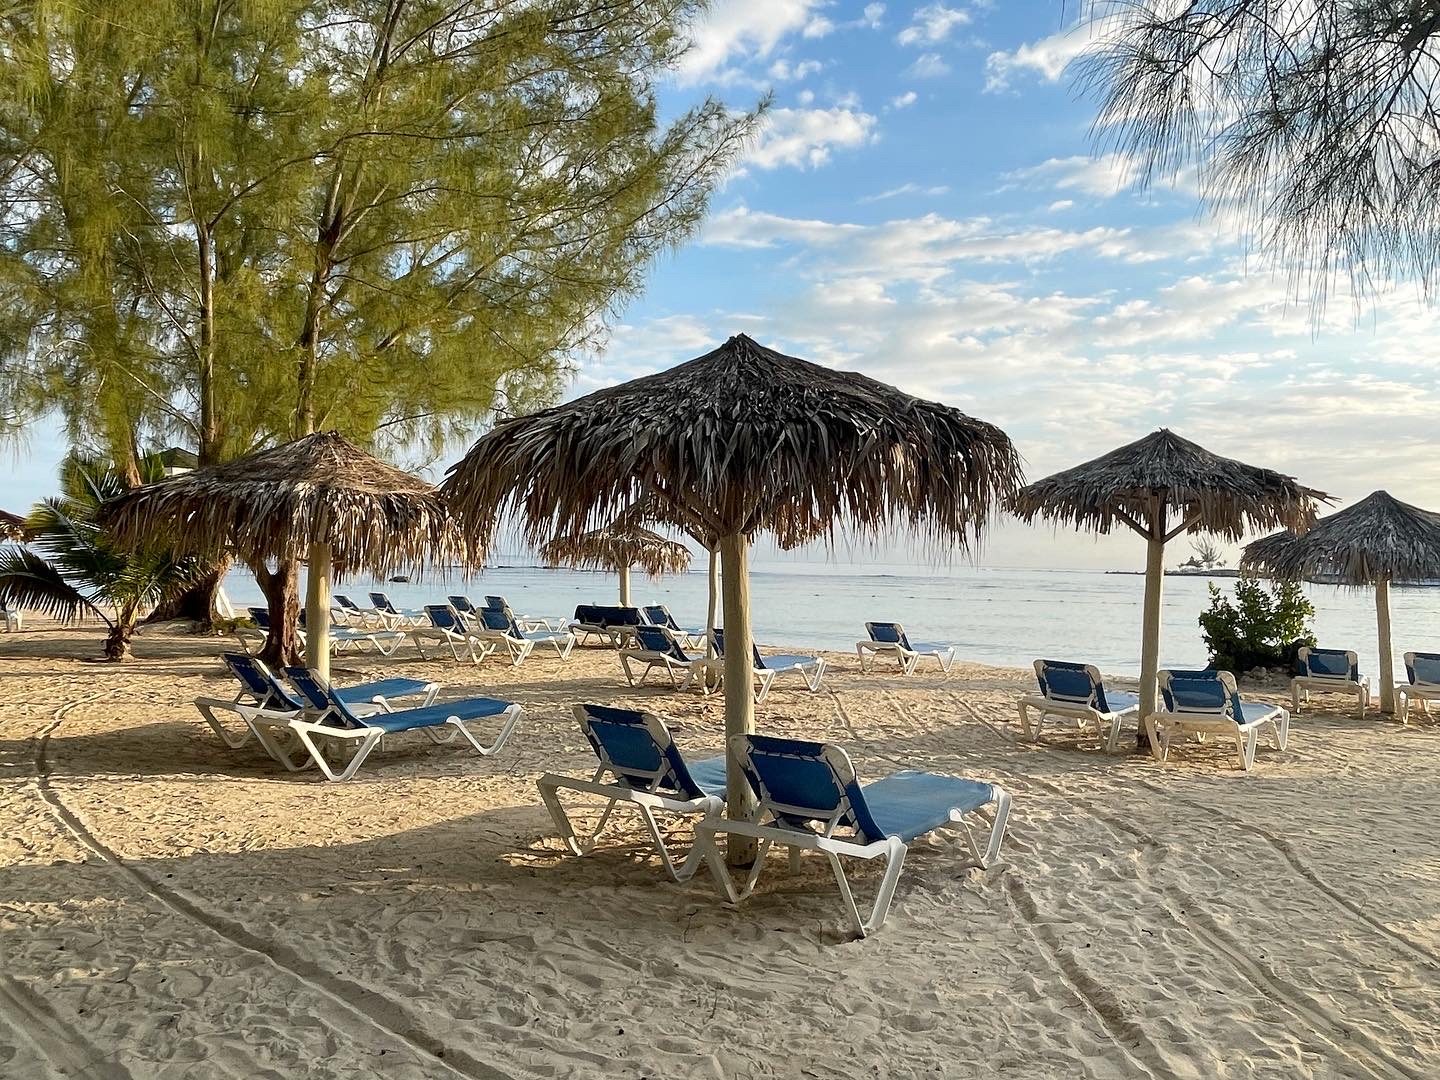 Beach chairs on the sand at the Grand Bahia Principe Resort in Runaway Bay, Jamaica